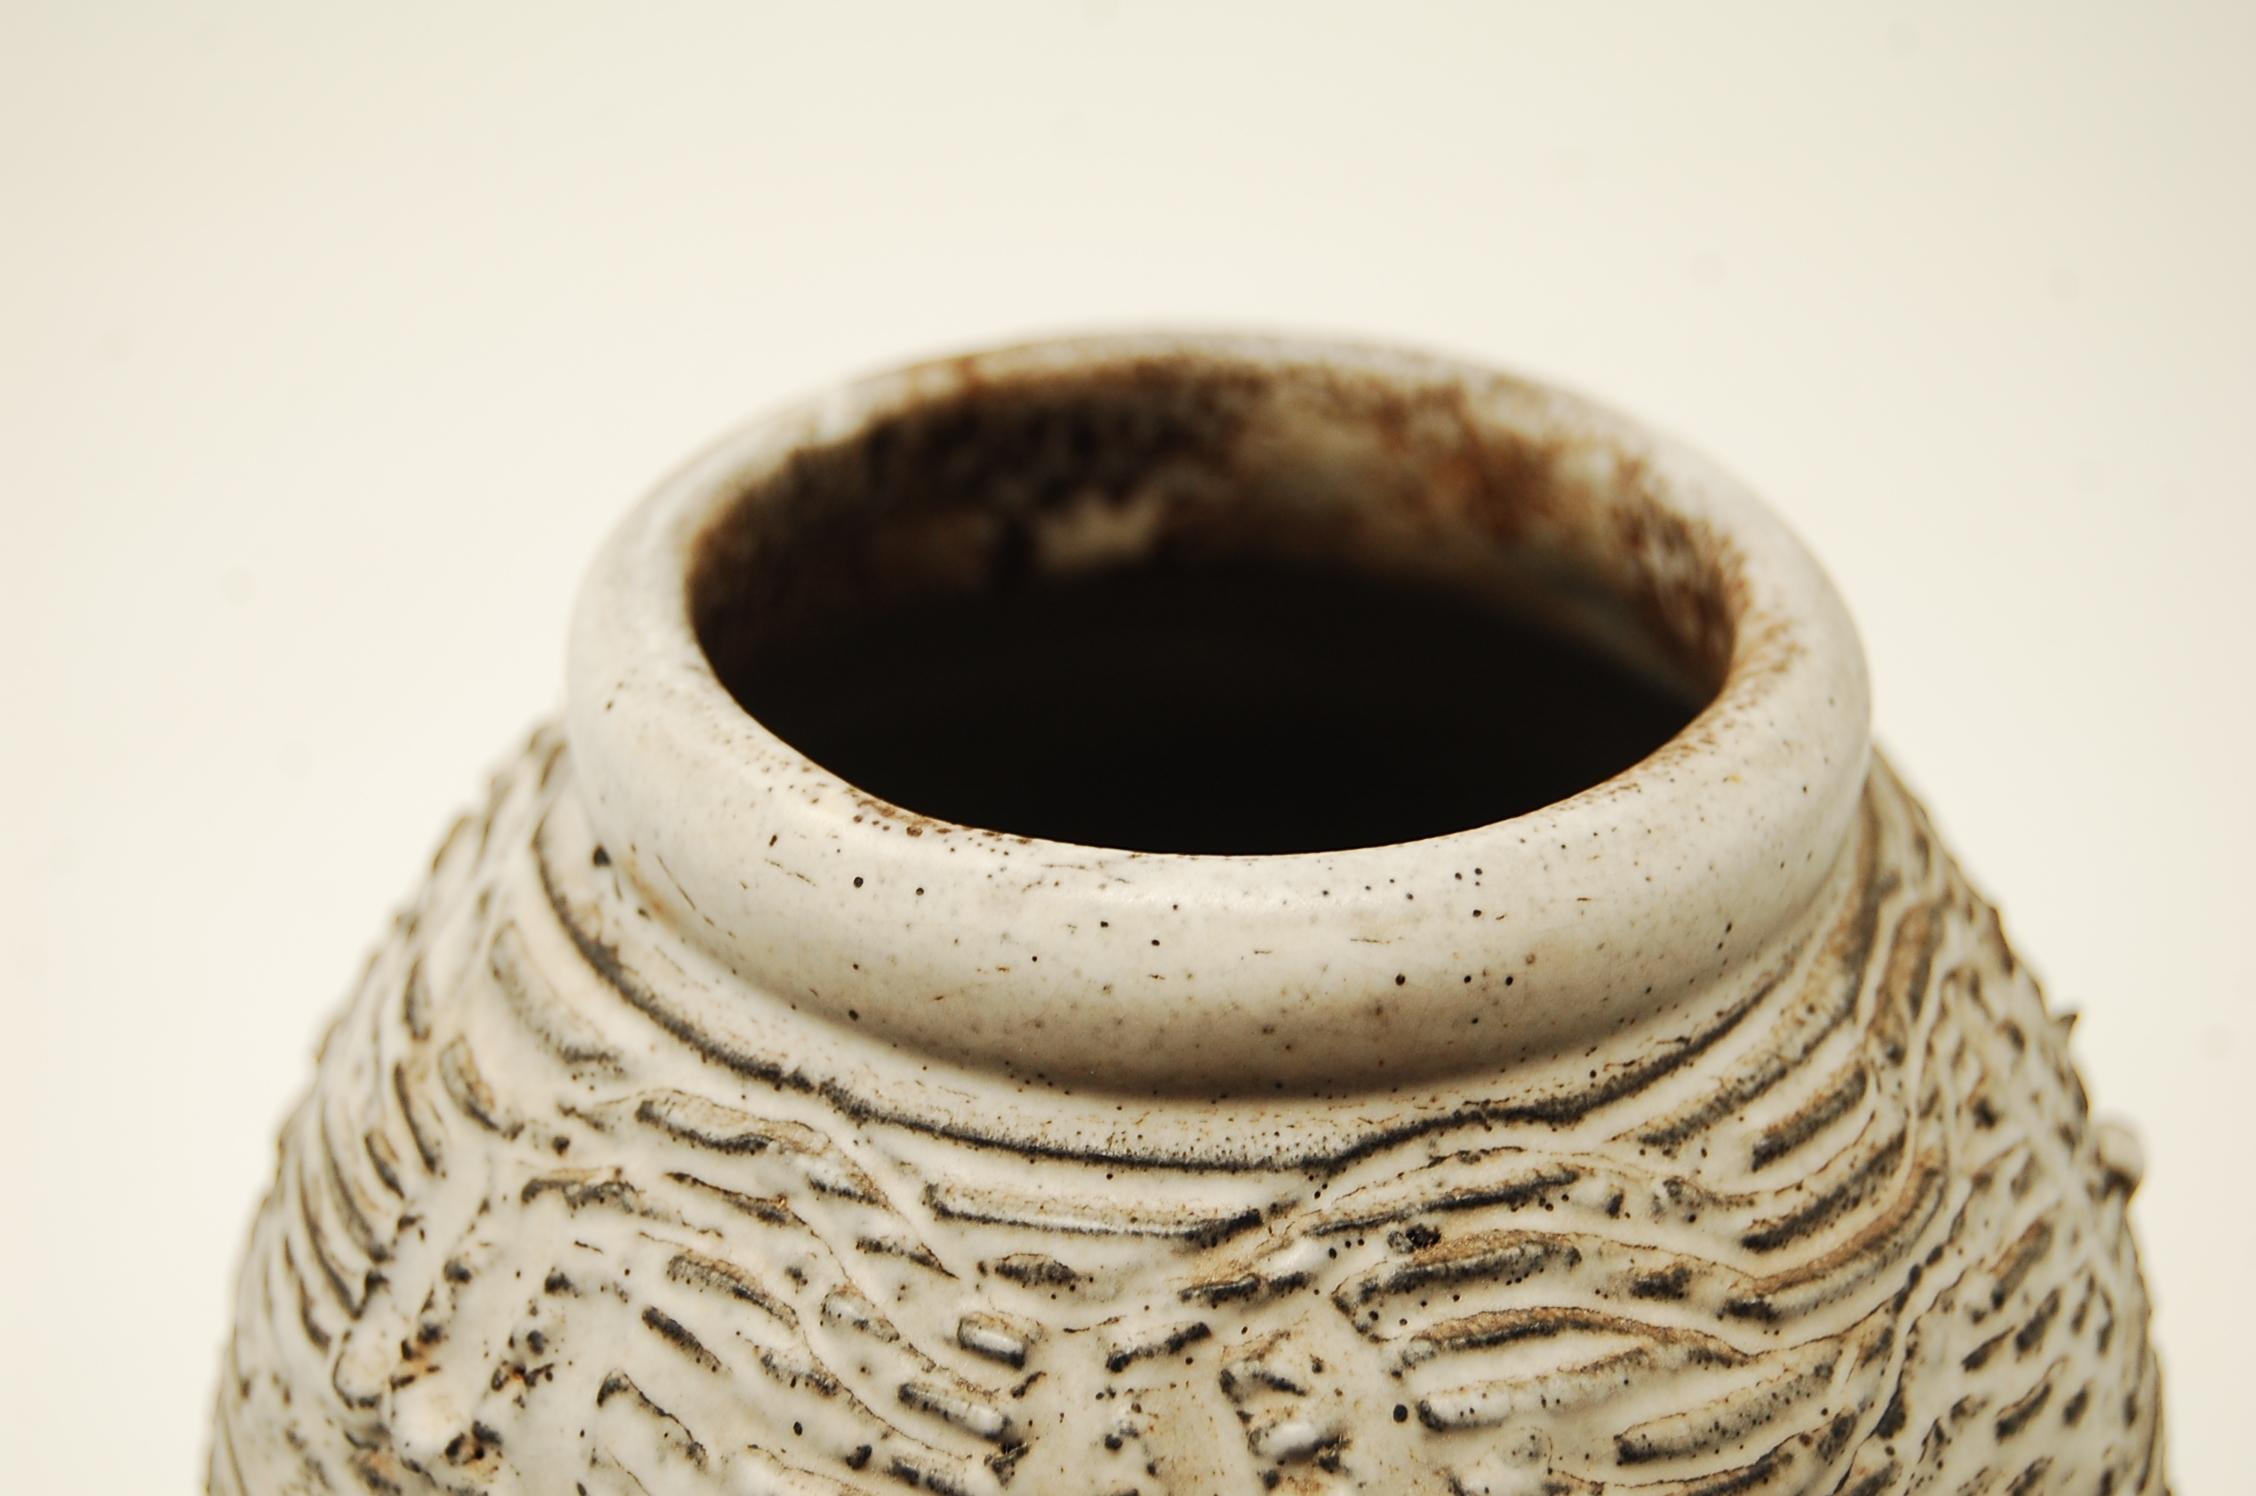 American Early Design Technics Pottery Vase